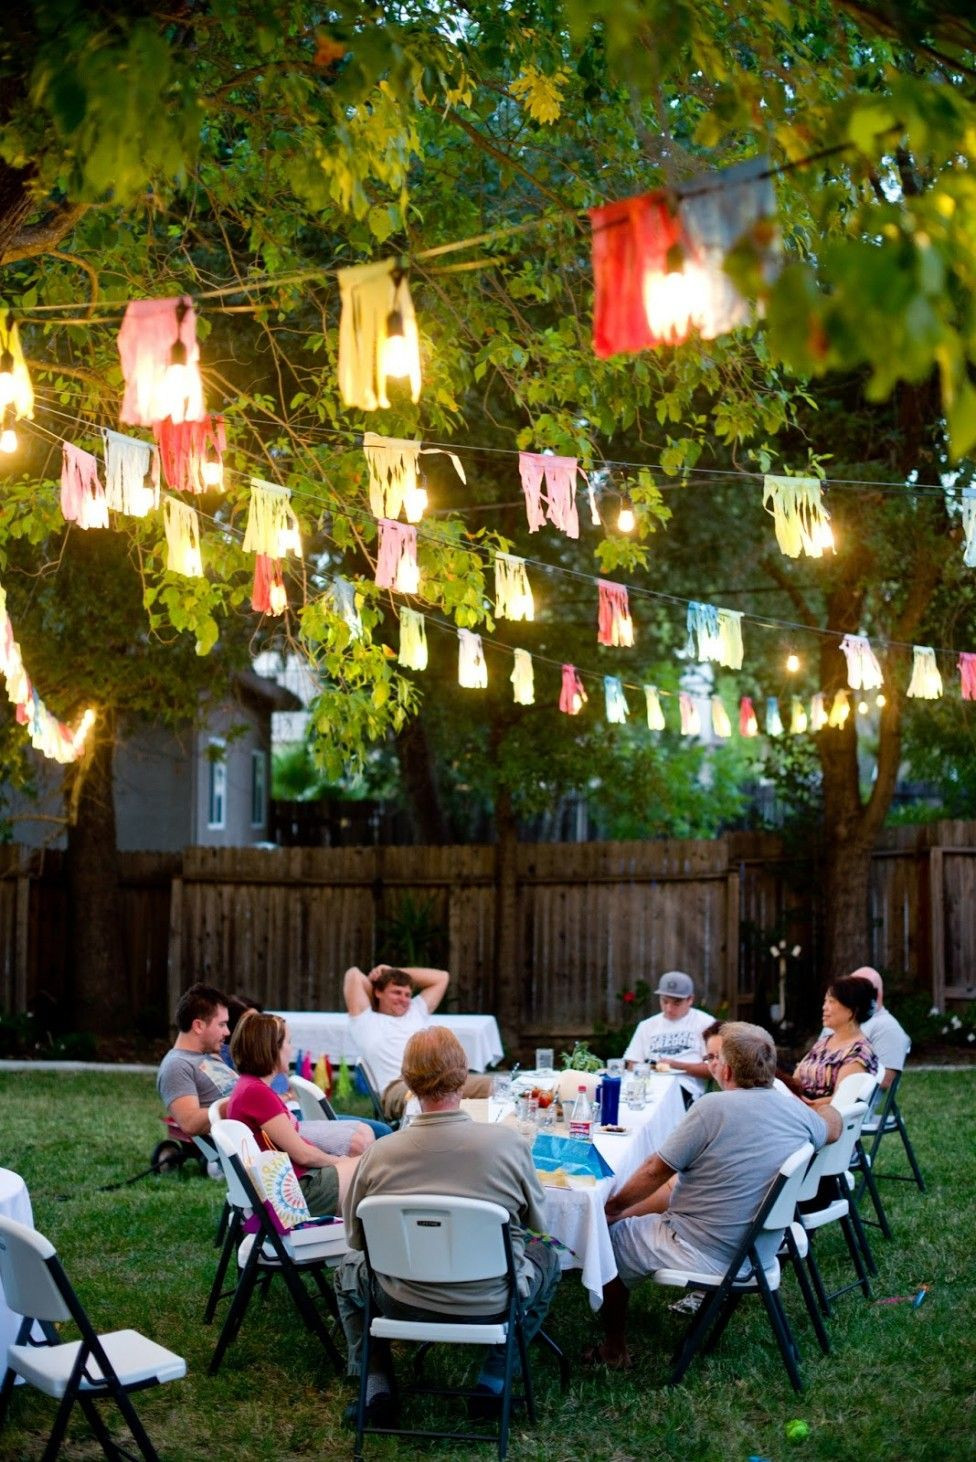 Backyard Party Ideas On Pinterest
 Garden Party Ideas For Adults